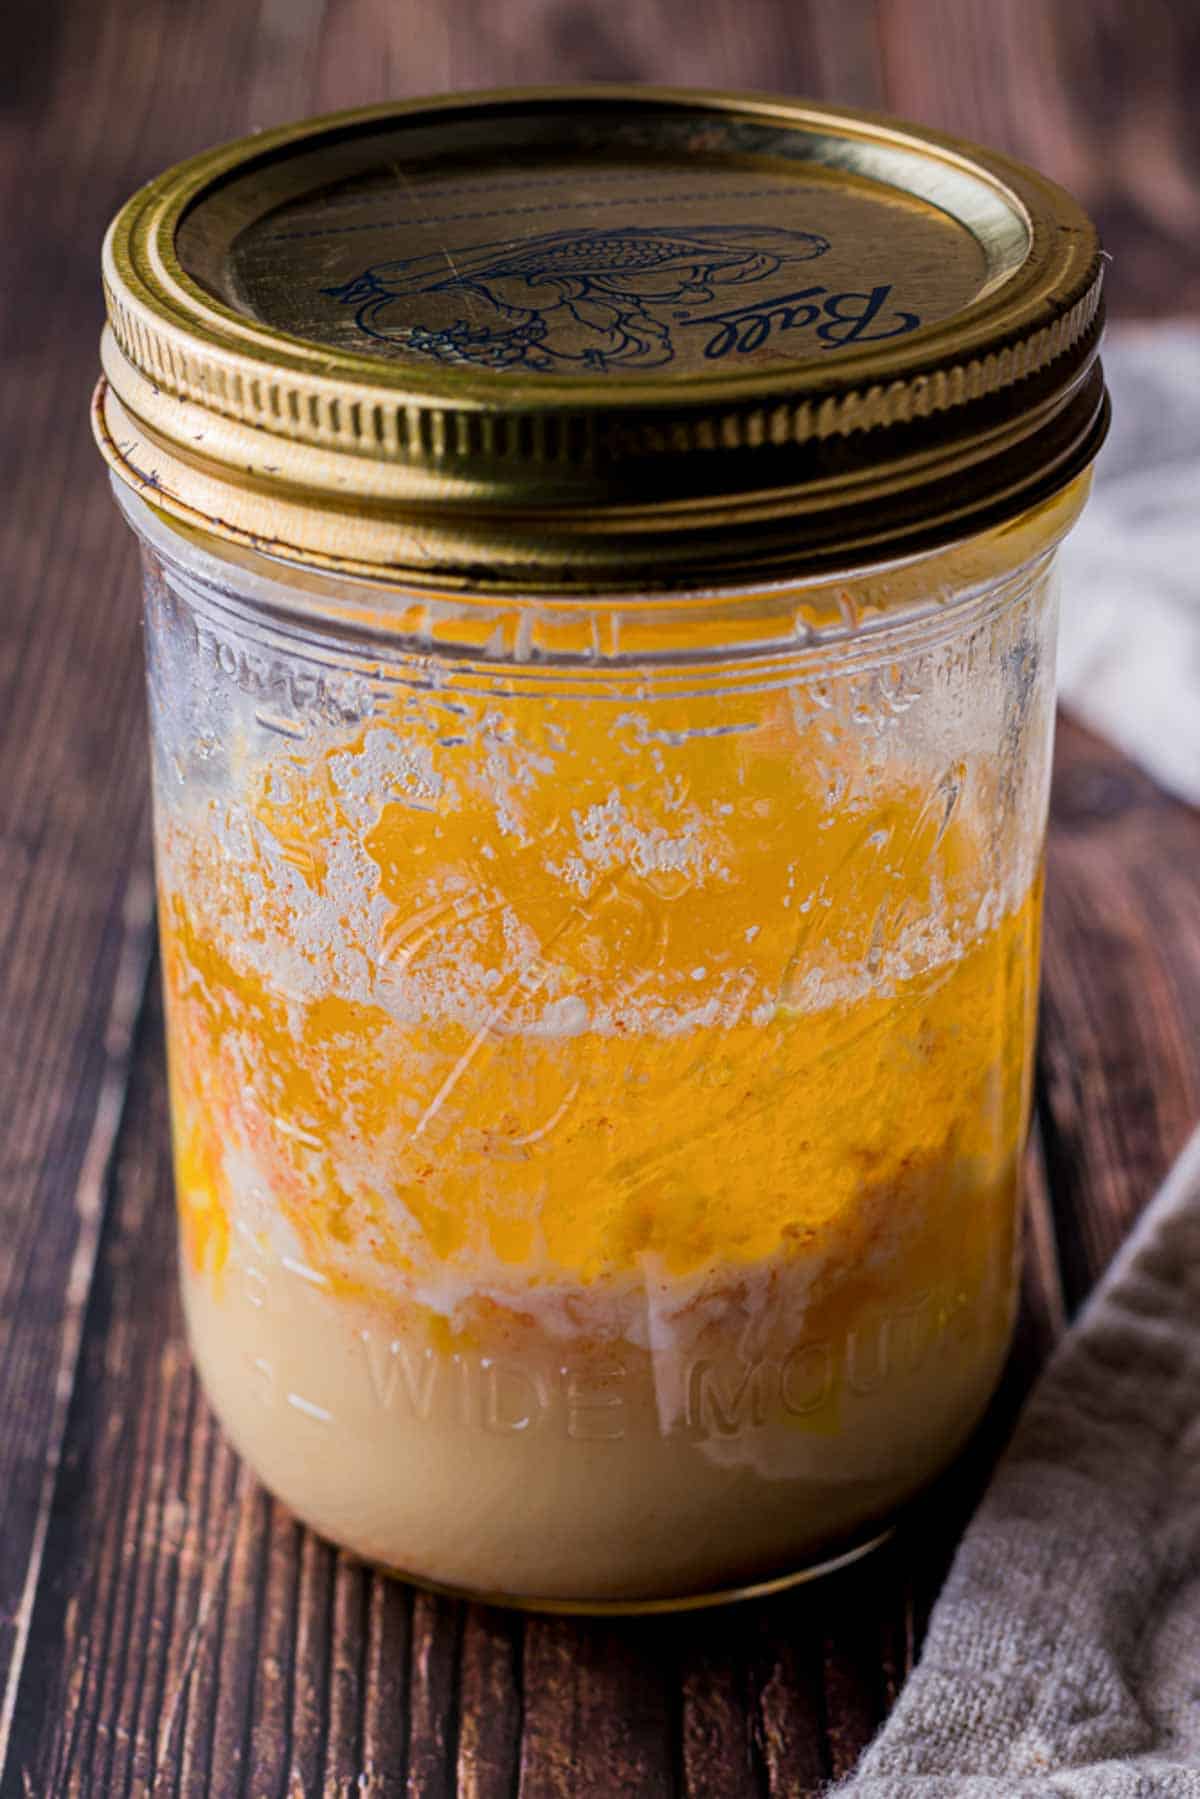 a jar of yellow liquid